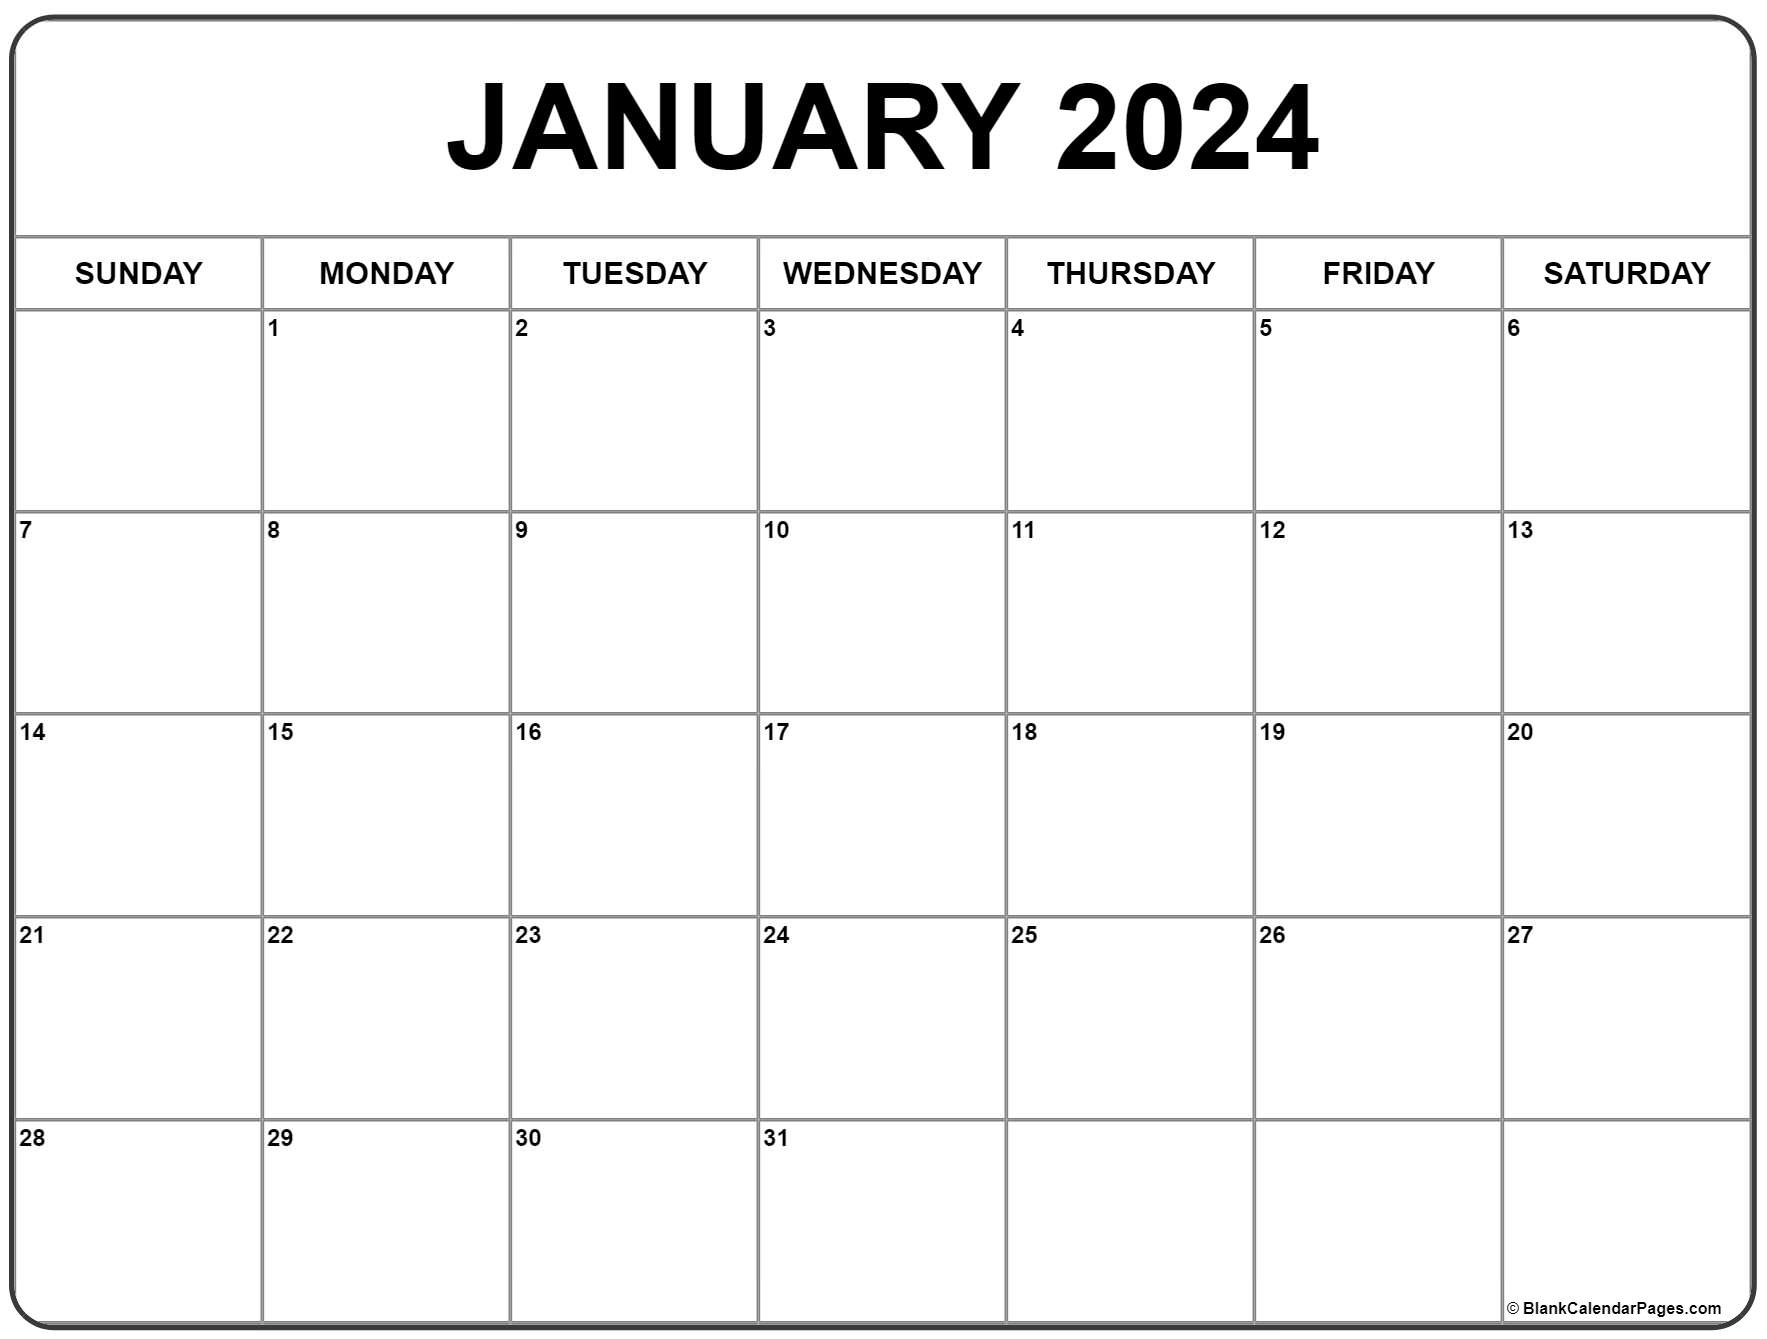 January 2024 Calendar | Free Printable Calendar for January Calendar Free Printable 2024